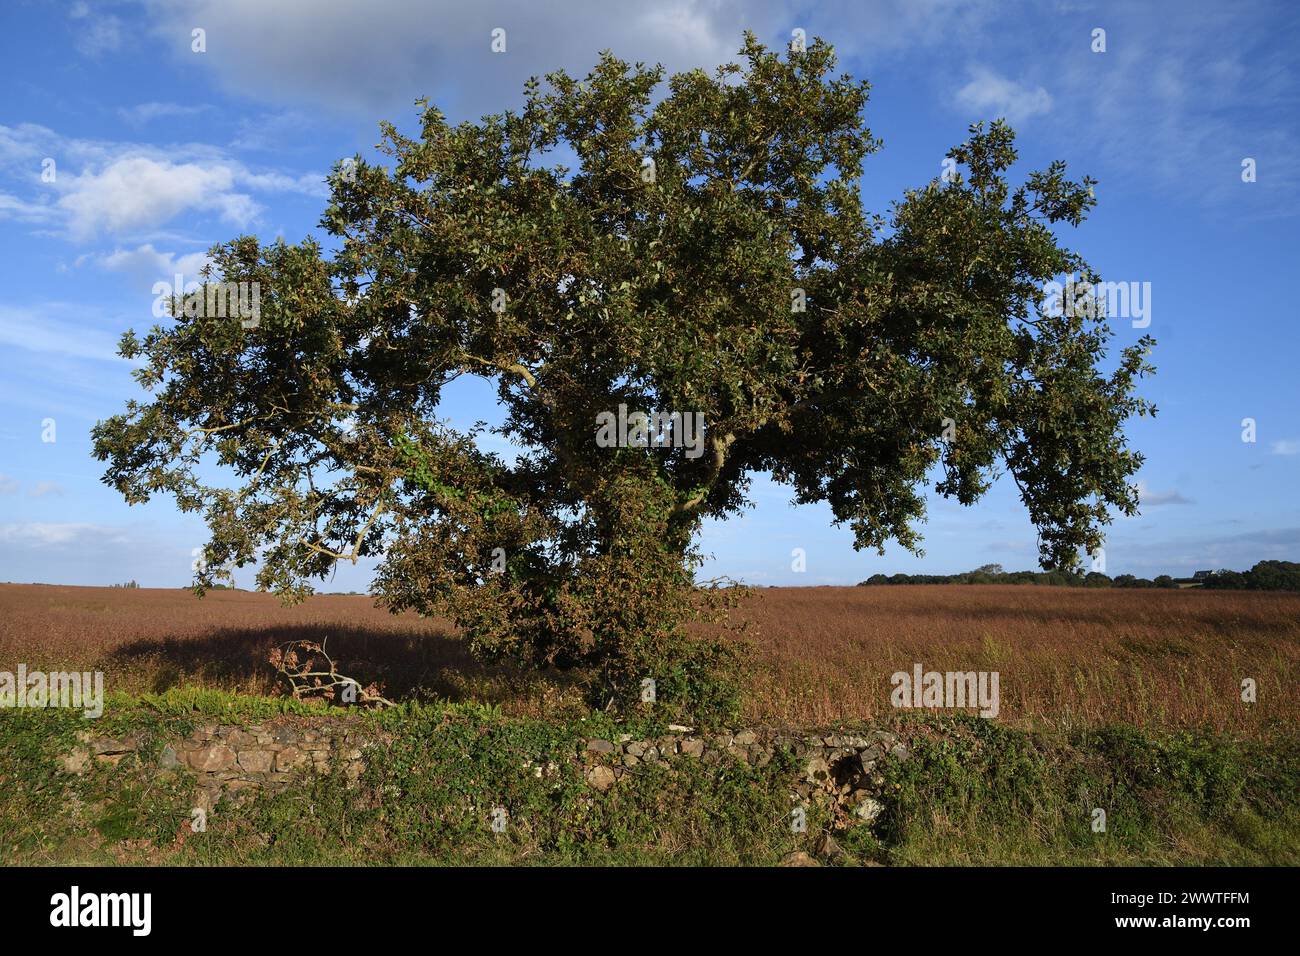 common oak, pedunculate oak, English oak (Quercus robur, Quercus pedunculata), oak tree on a stone wall at the edge of a field, France, Brittany Stock Photo